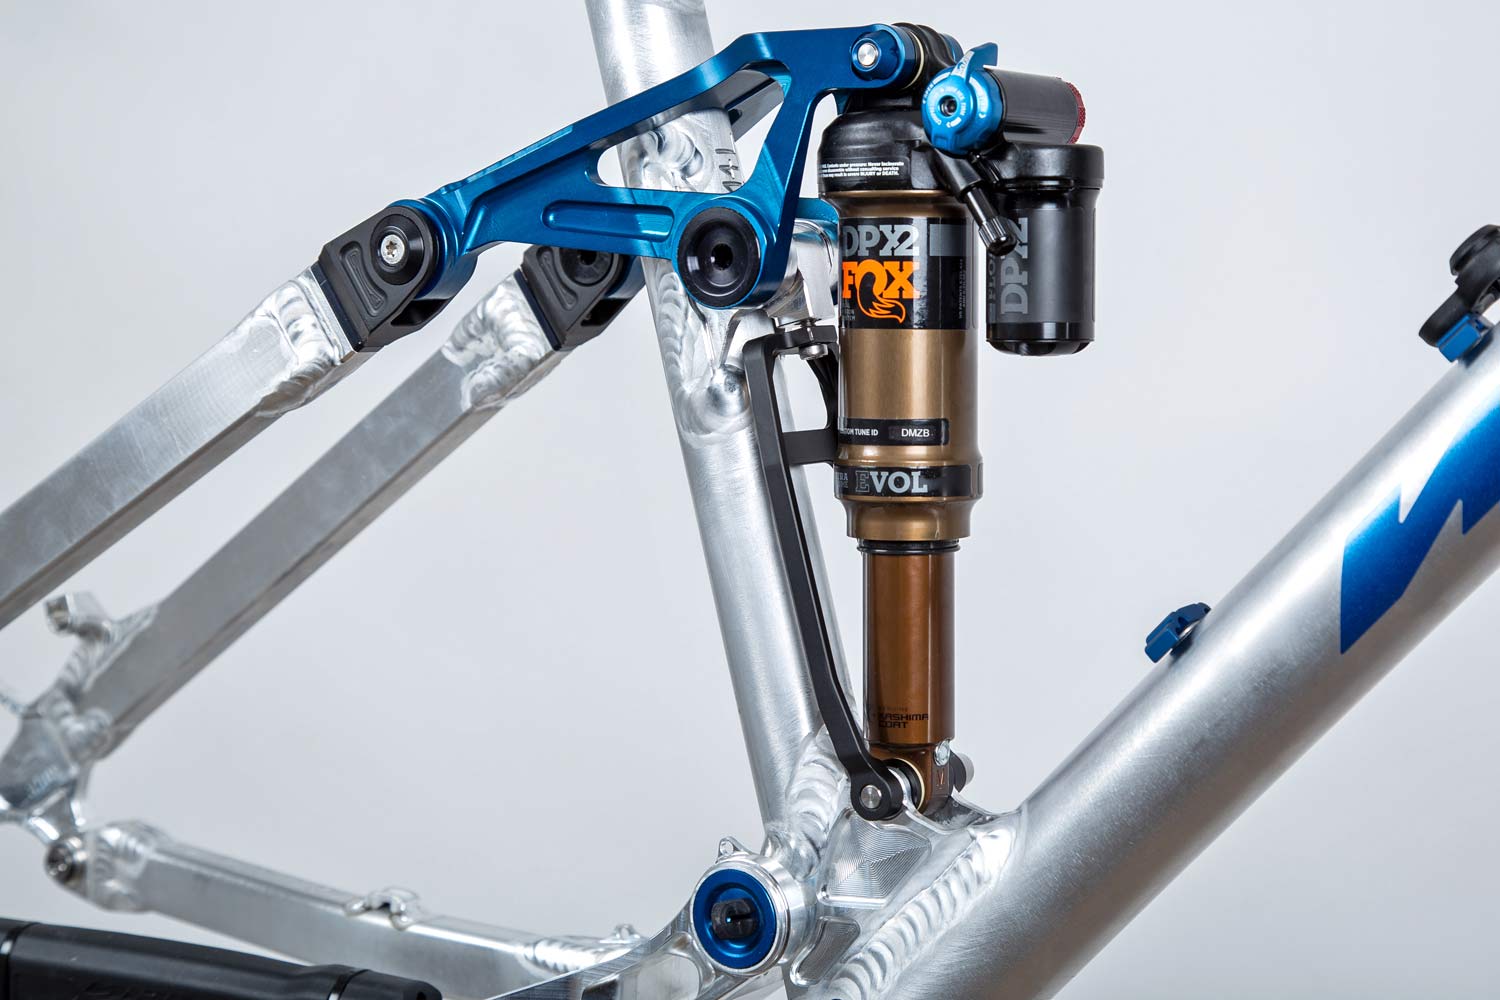 Nicolai Saturn 14 trail bike, modern lightweight aluminum 7020 alloy 140mm all-mountain bike